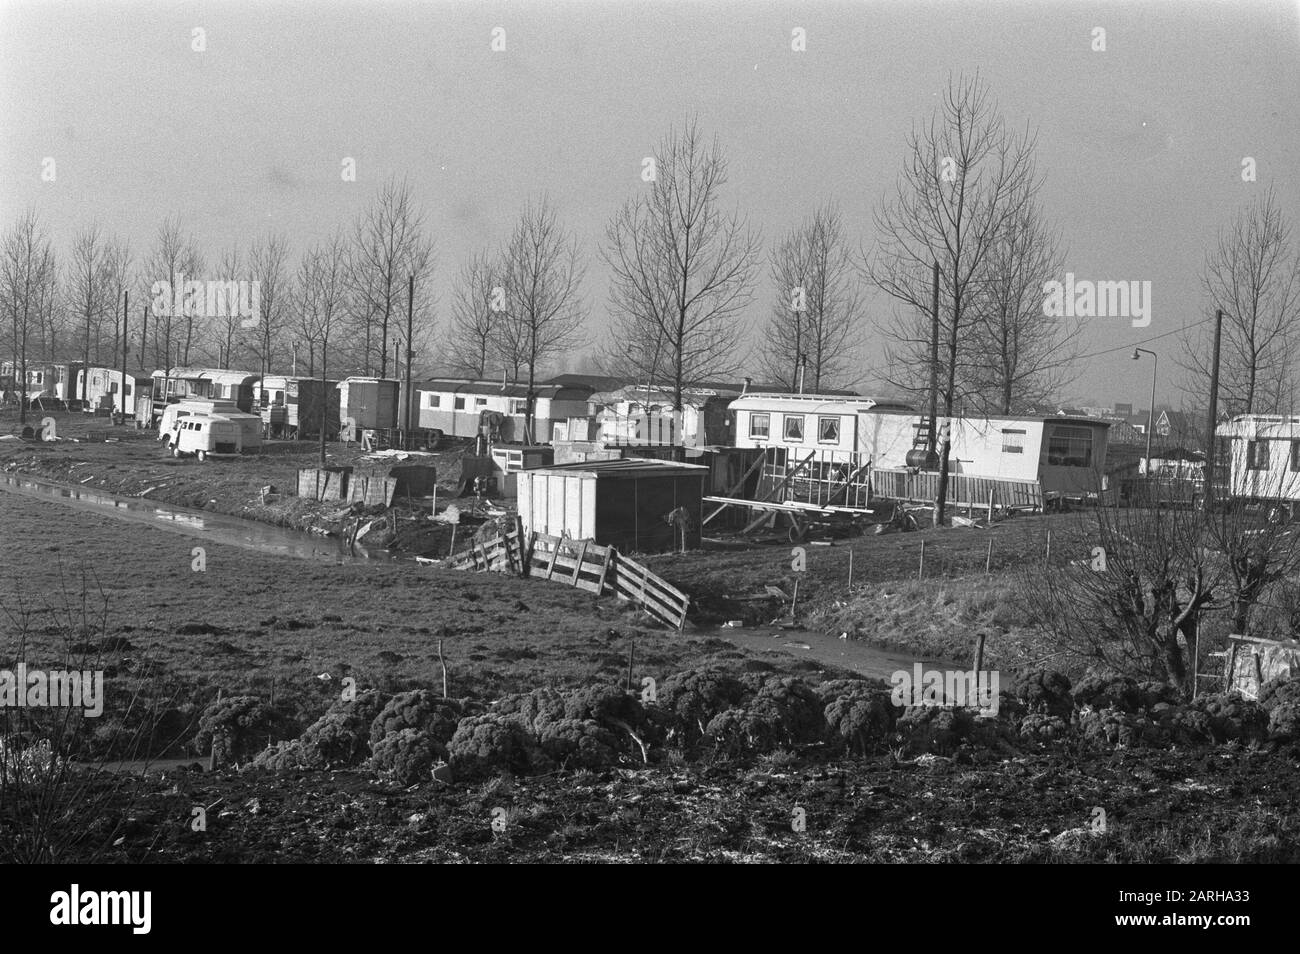 Dapper Geniet Tanzania Woonwagenkamp aan Osdorpersweg, Amsterdam Date: February 5, 1972 Location:  Amsterdam, Noord-Holland Keywords: caravans Stock Photo - Alamy